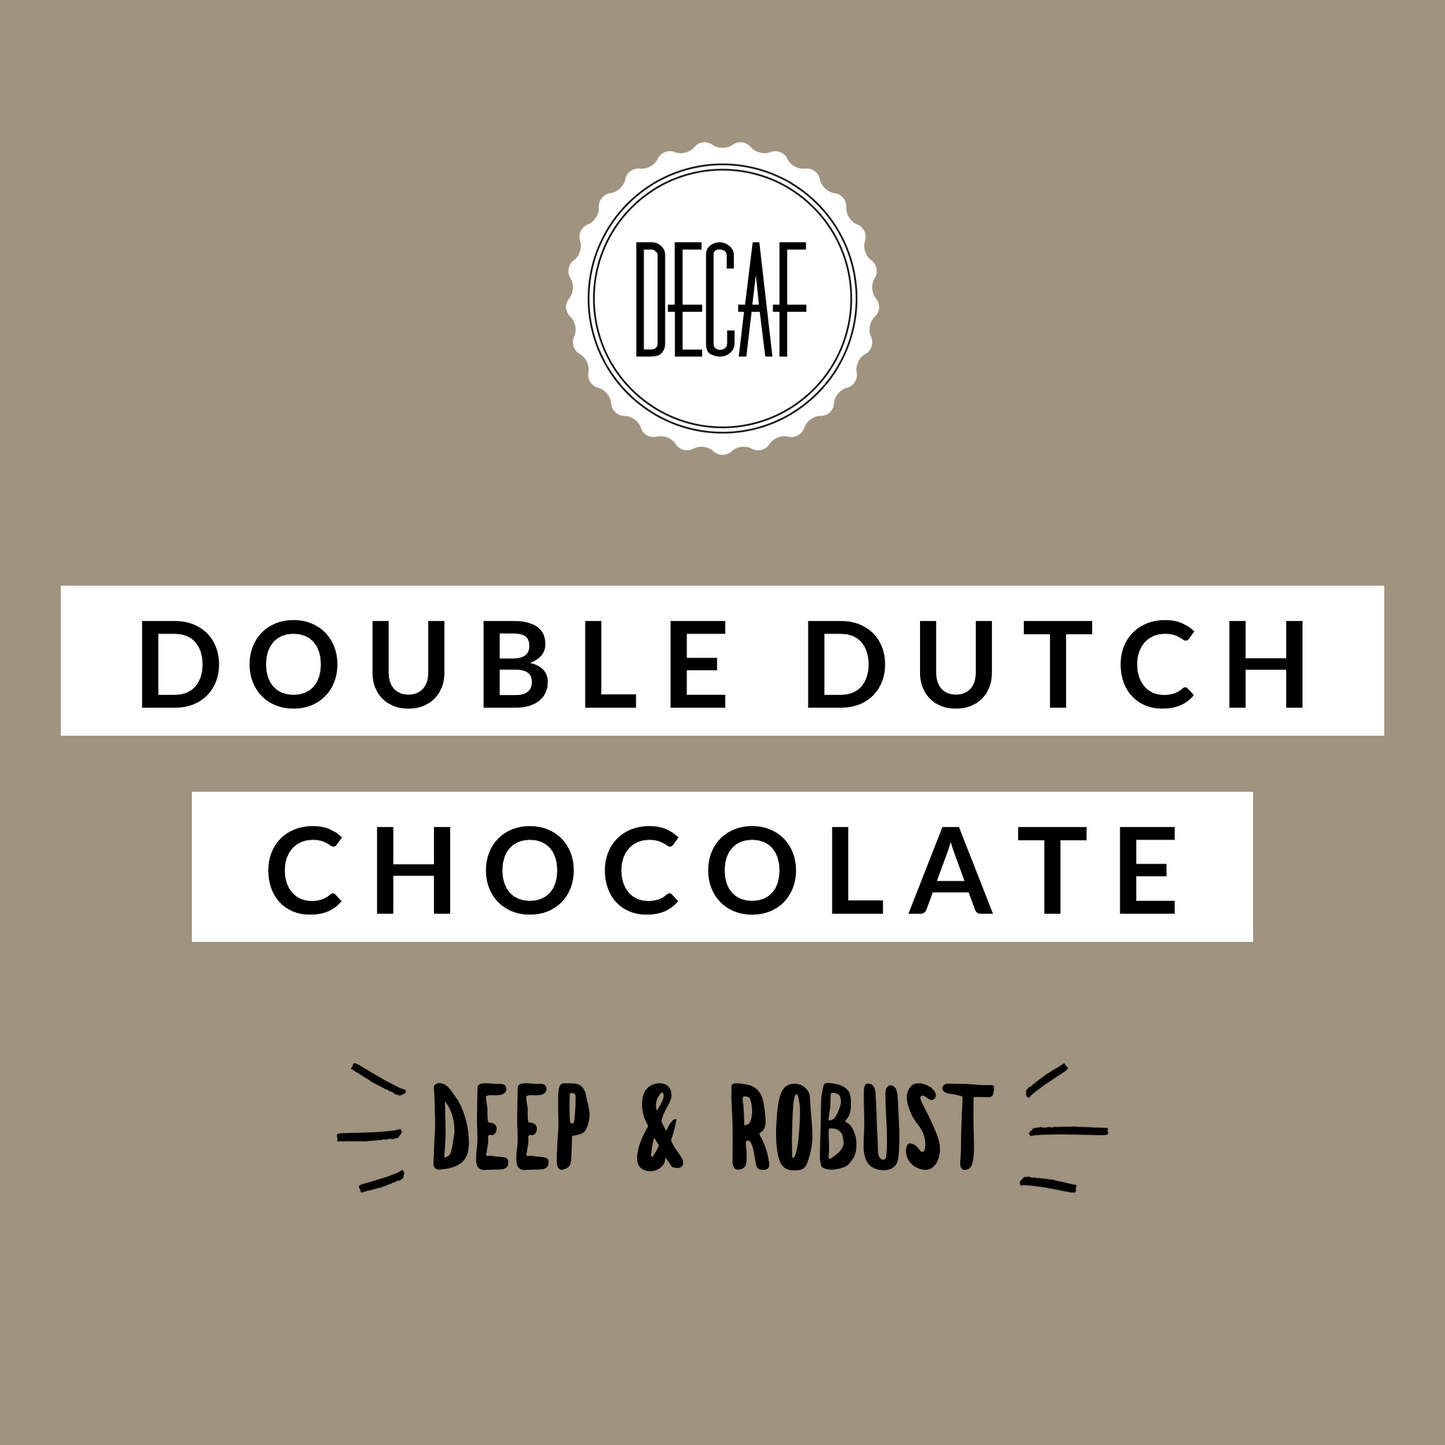 Double Dutch Chocolate Decaf